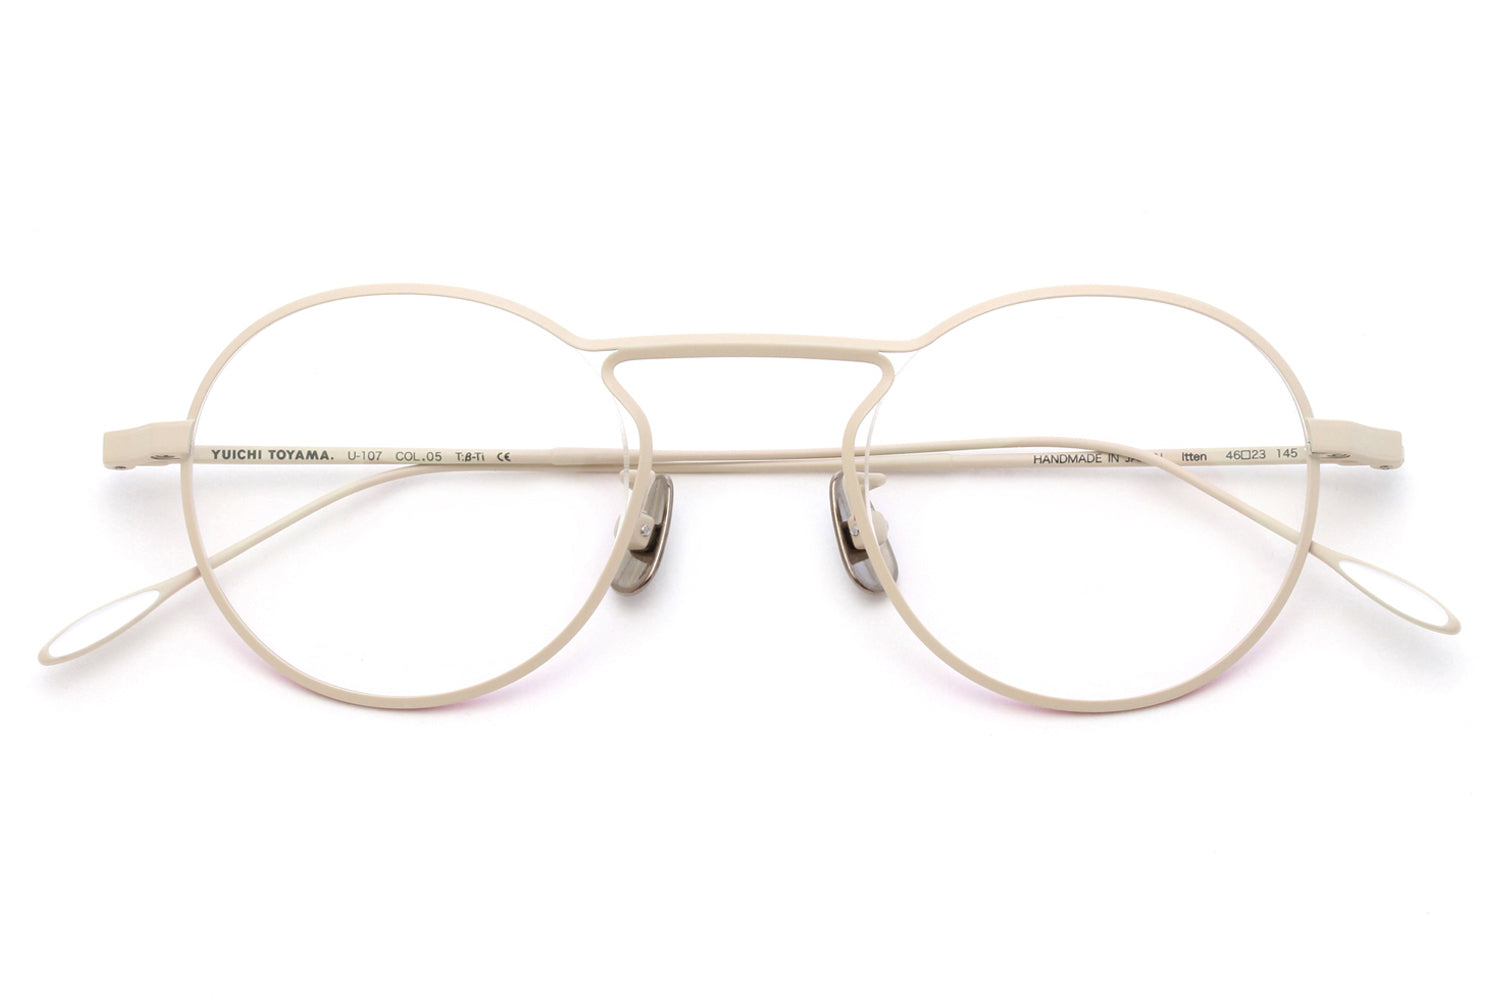 Yuichi Toyama - Itten (U-107) Eyeglasses | Specs Collective